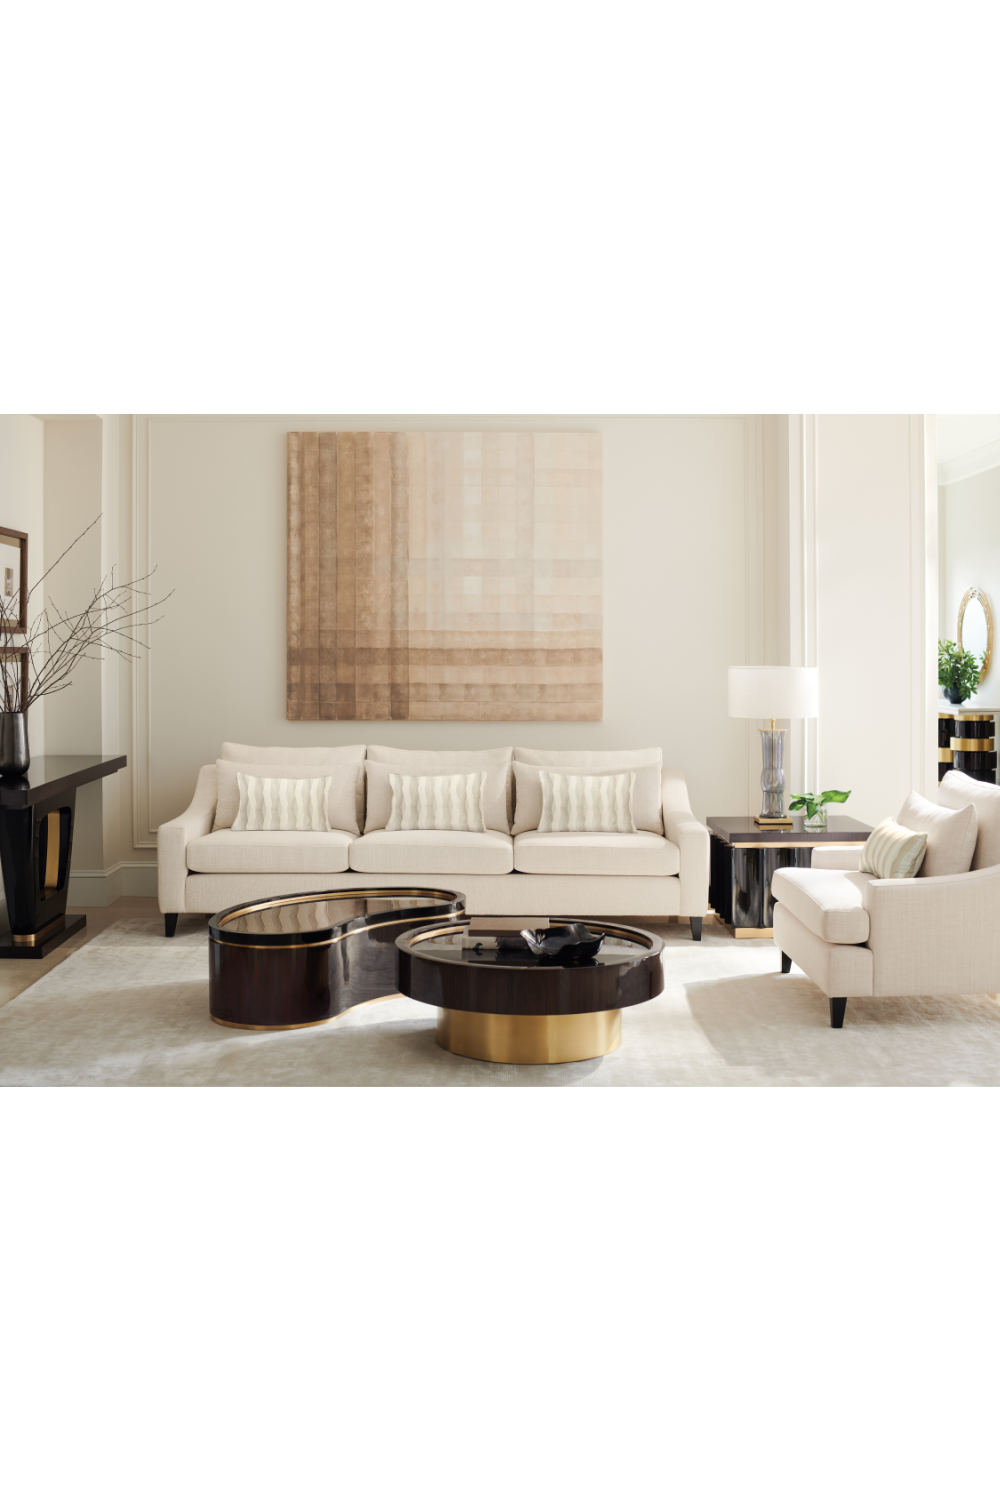 White Linen Lounge Chair | Caracole The Madison | Oroa.com